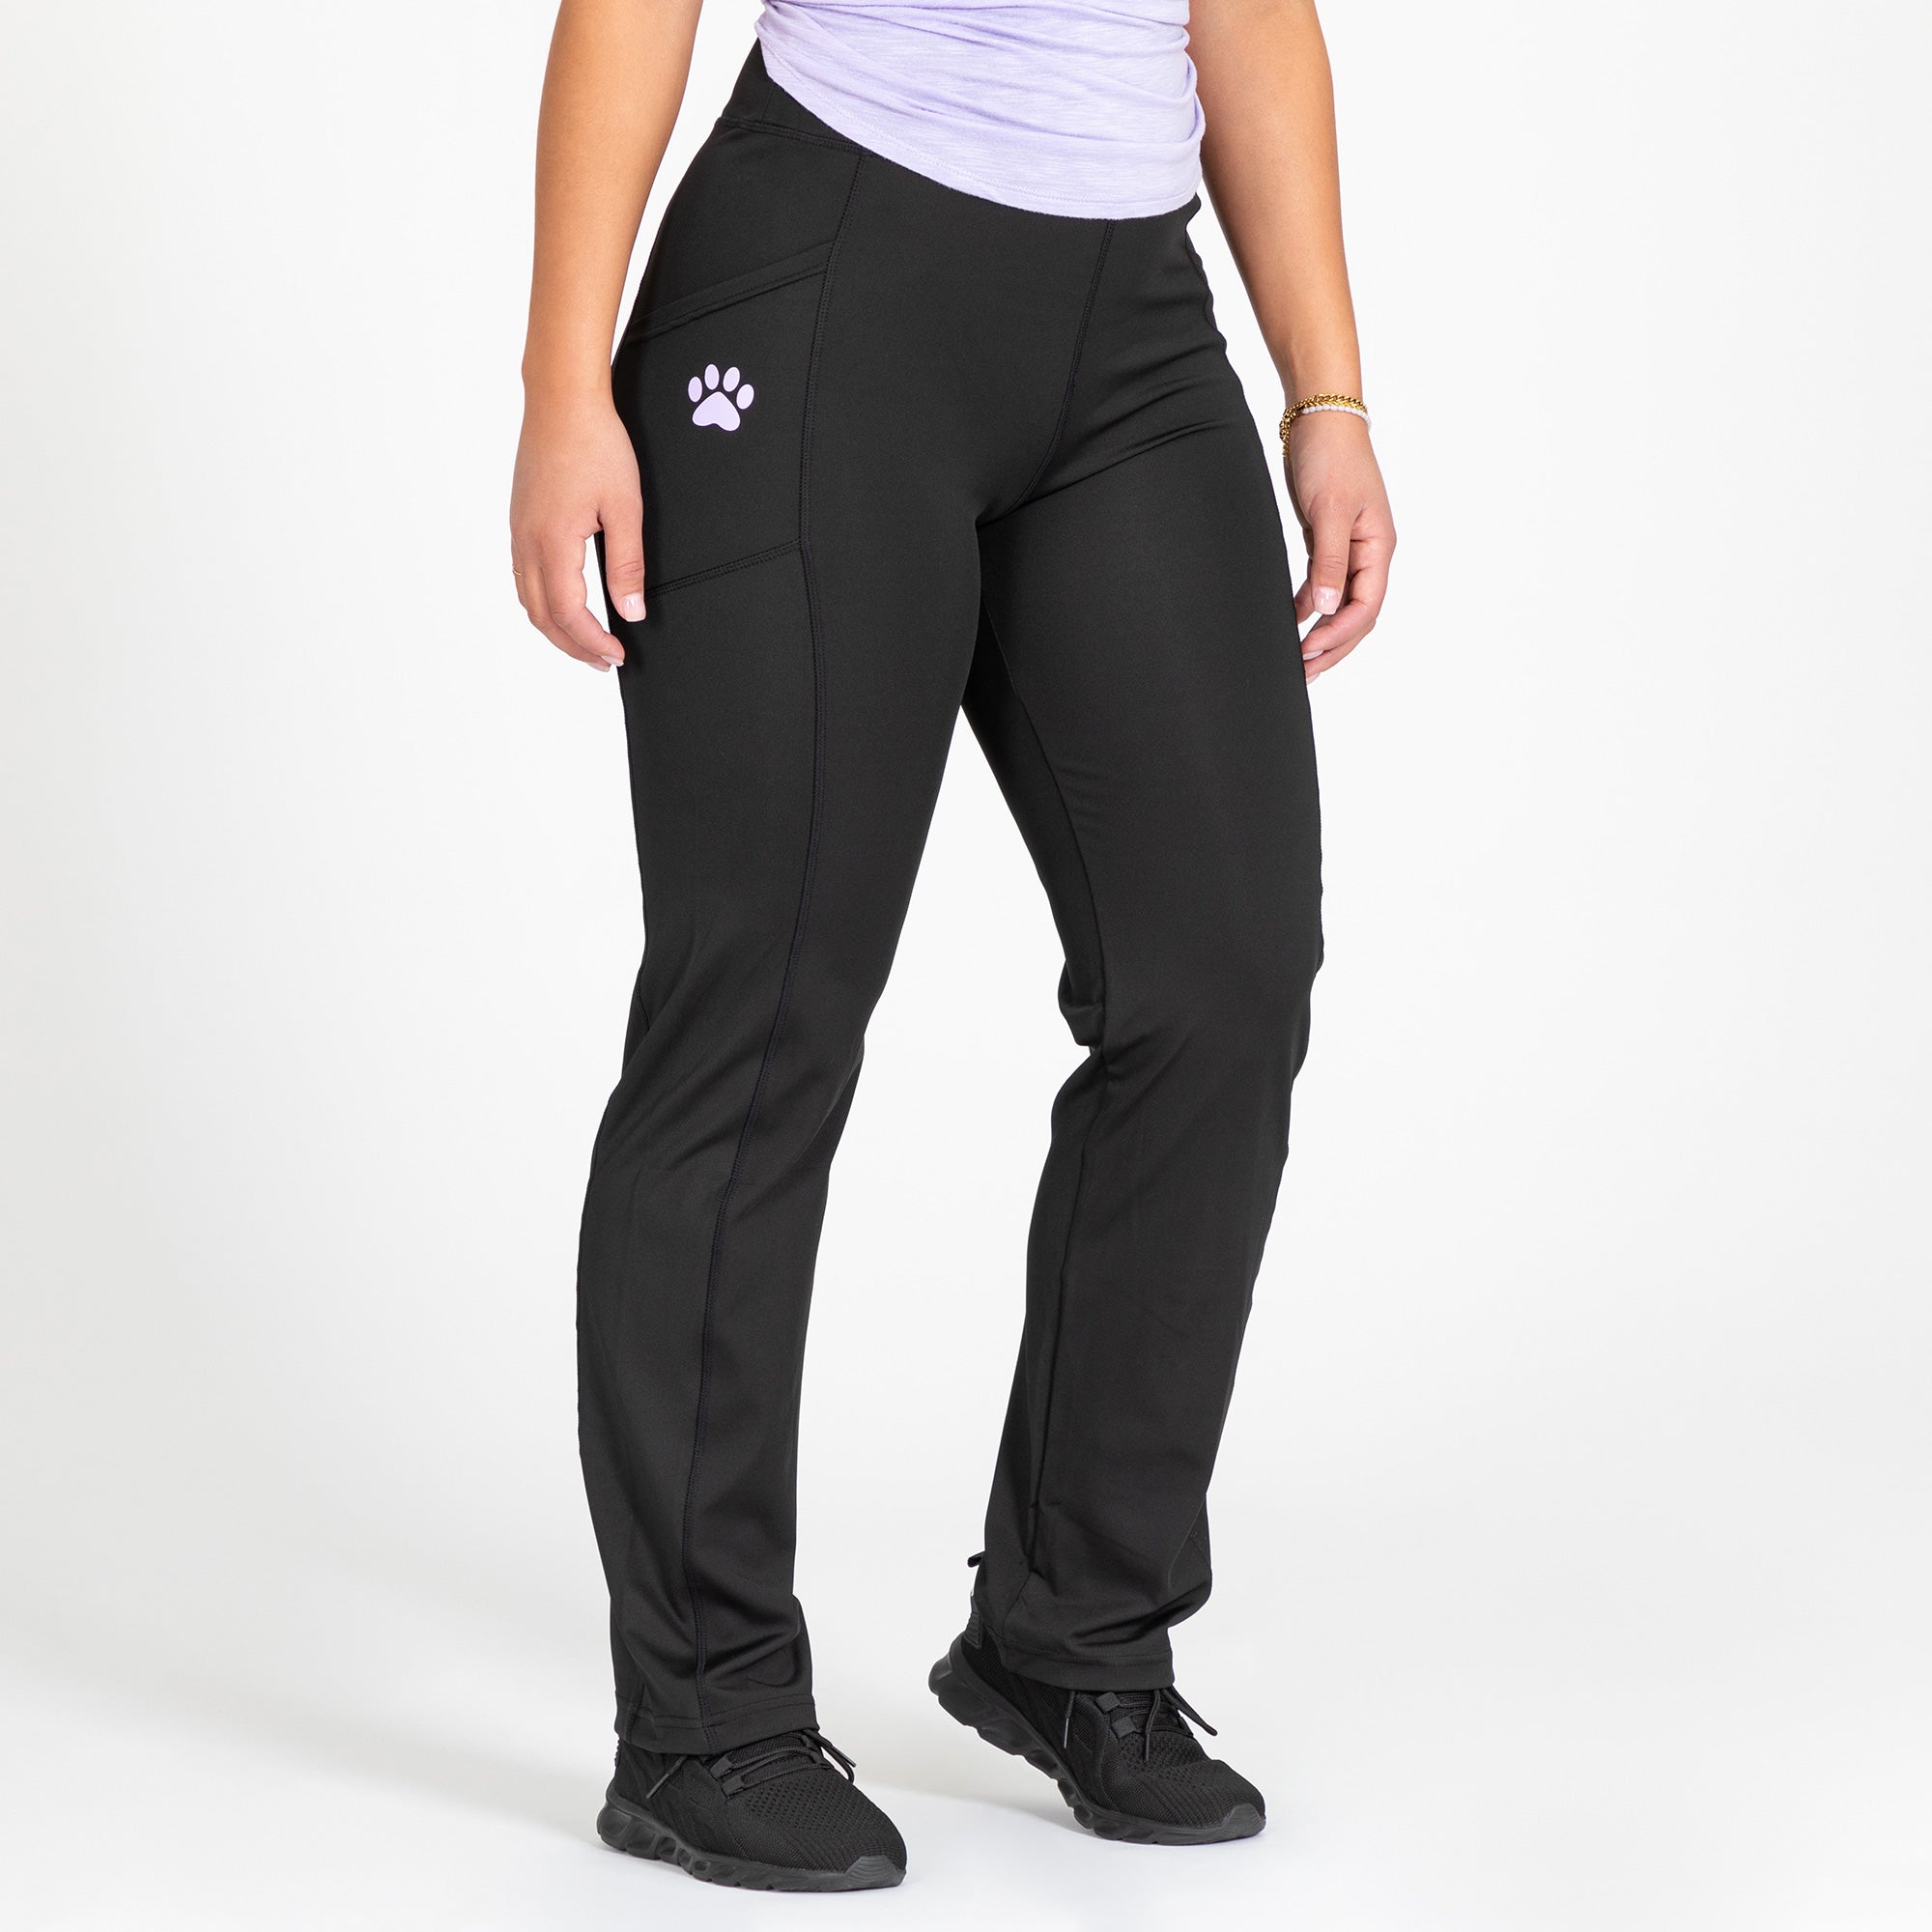 Purple Paw Yoga Separates - Pants - Black - S